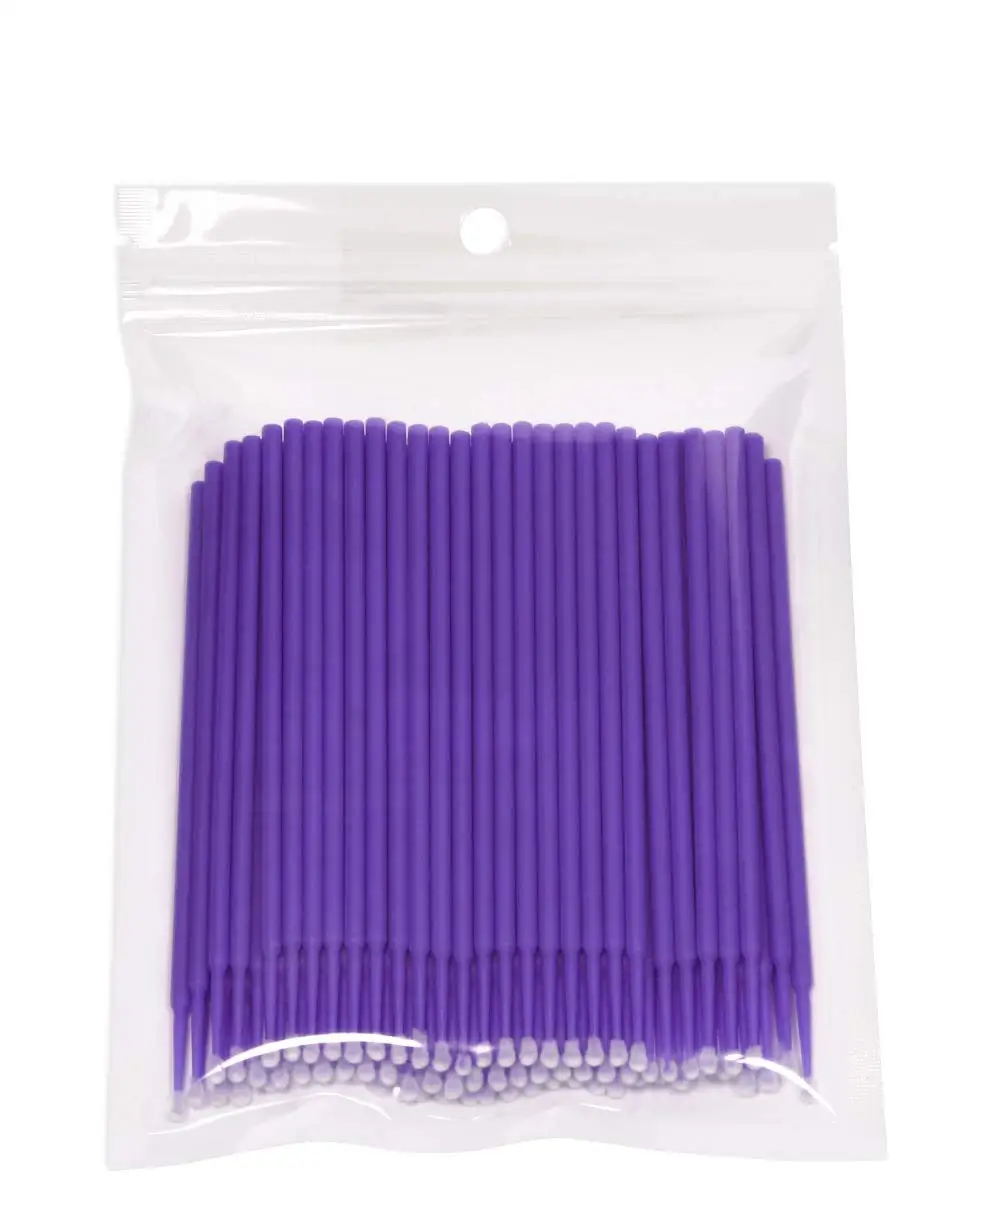 

100Pcs/bag Disposable MicroBrush Eyelashes Extension Individual Lash Removing Swab Micro Brush For Eyelash Extension Tools, Green,purple,pink,blue